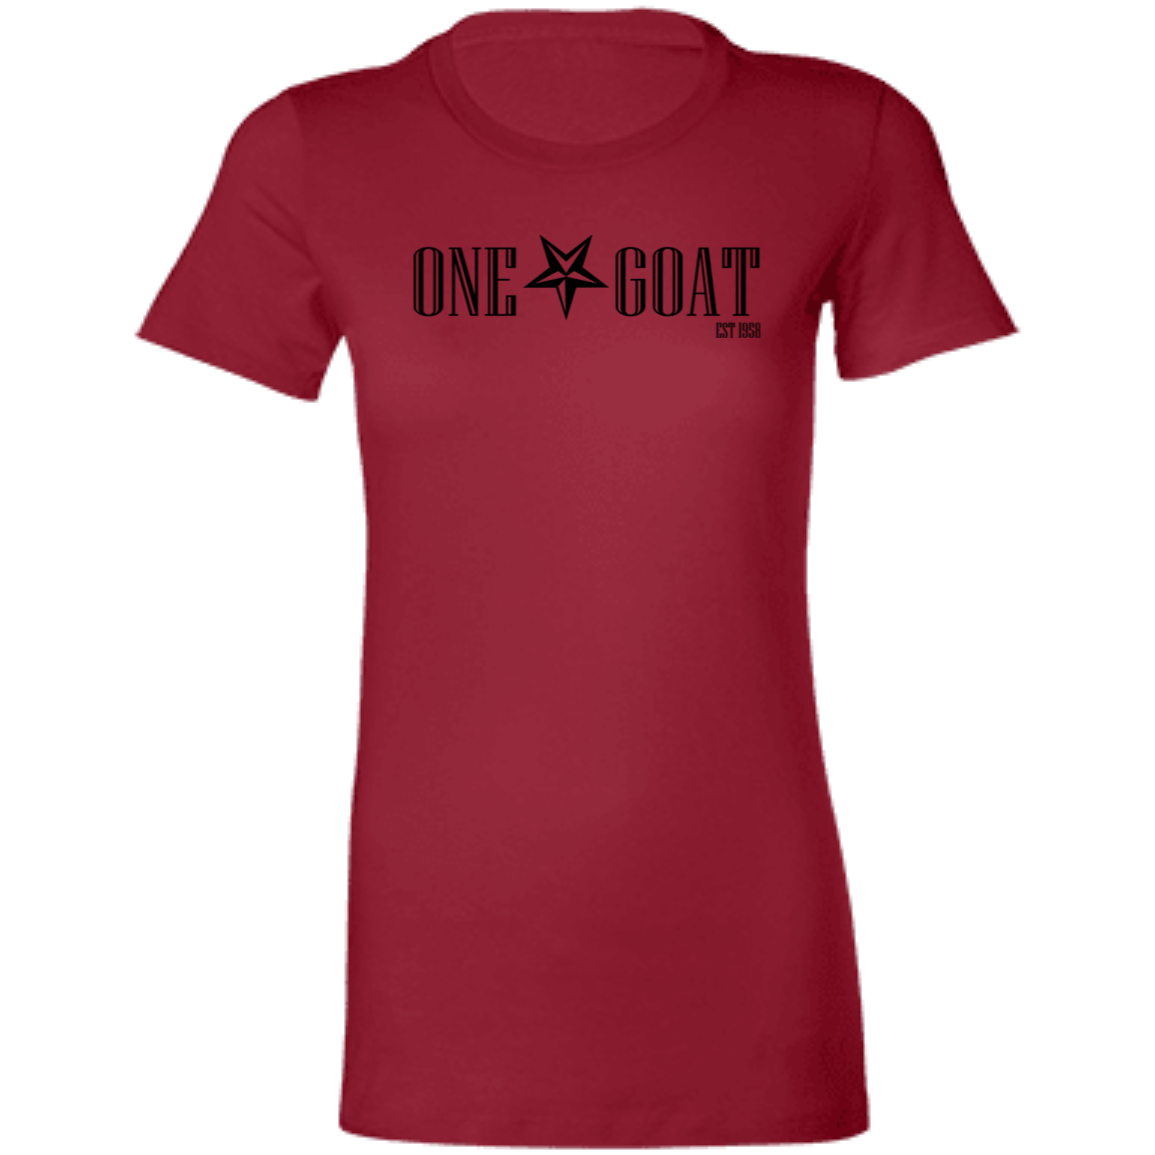 One Star Goat Ladies' Favorite T-Shirt